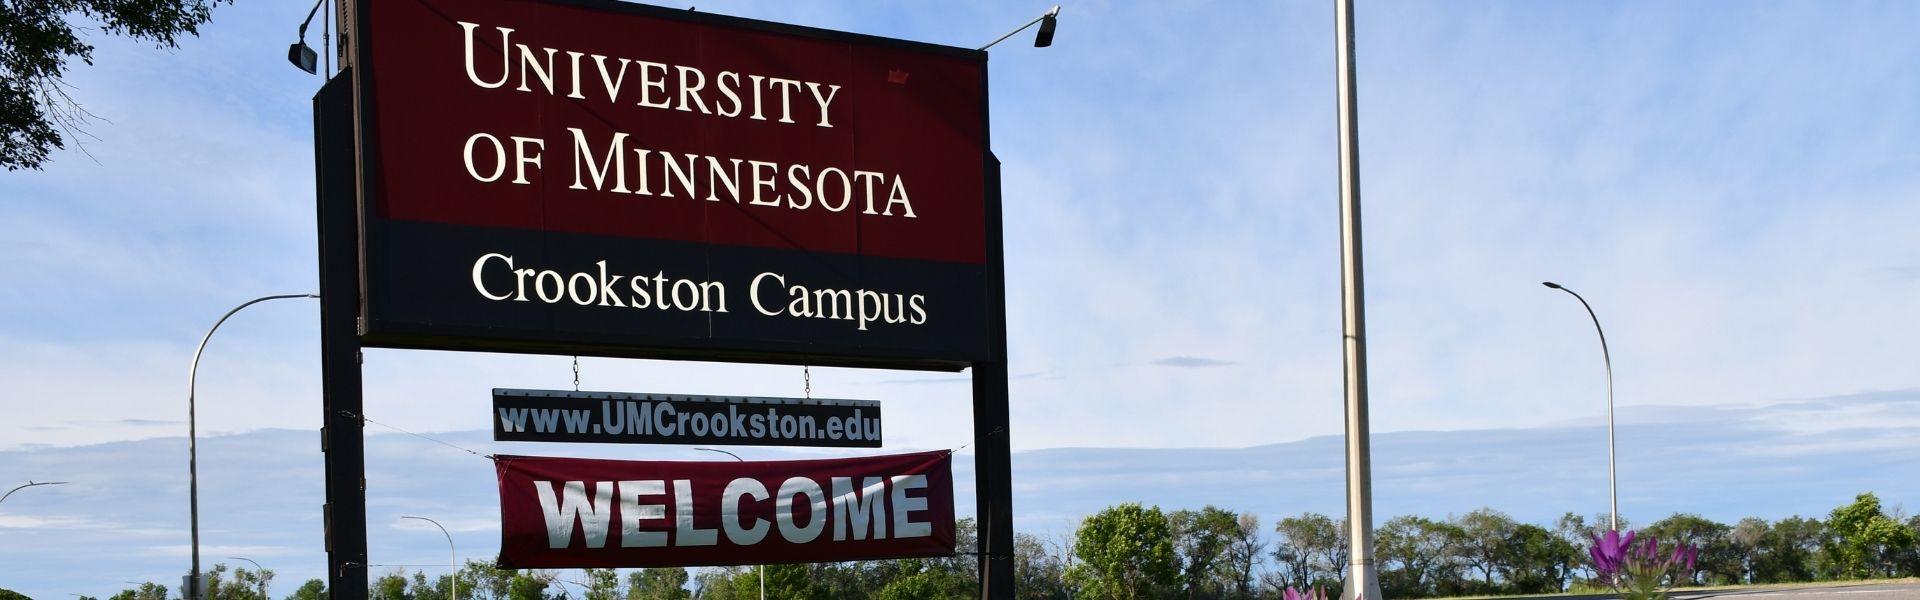 University of Minnesota Crookston Campus Highway 2 Road Sign